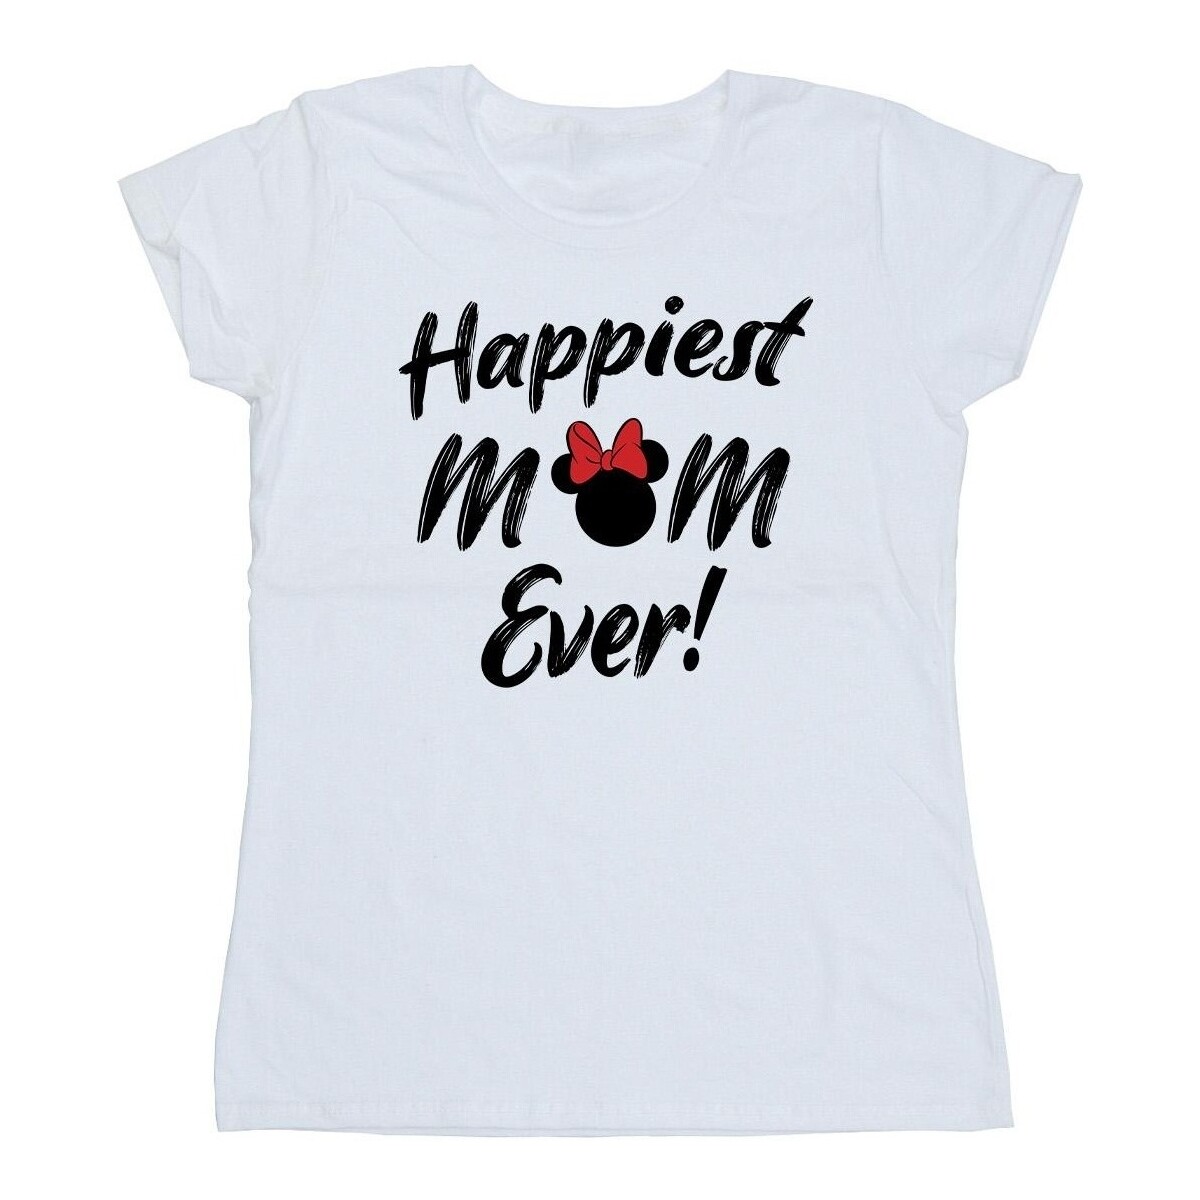 textil Mujer Camisetas manga larga Disney Minnie Mouse Happiest Mom Ever Blanco